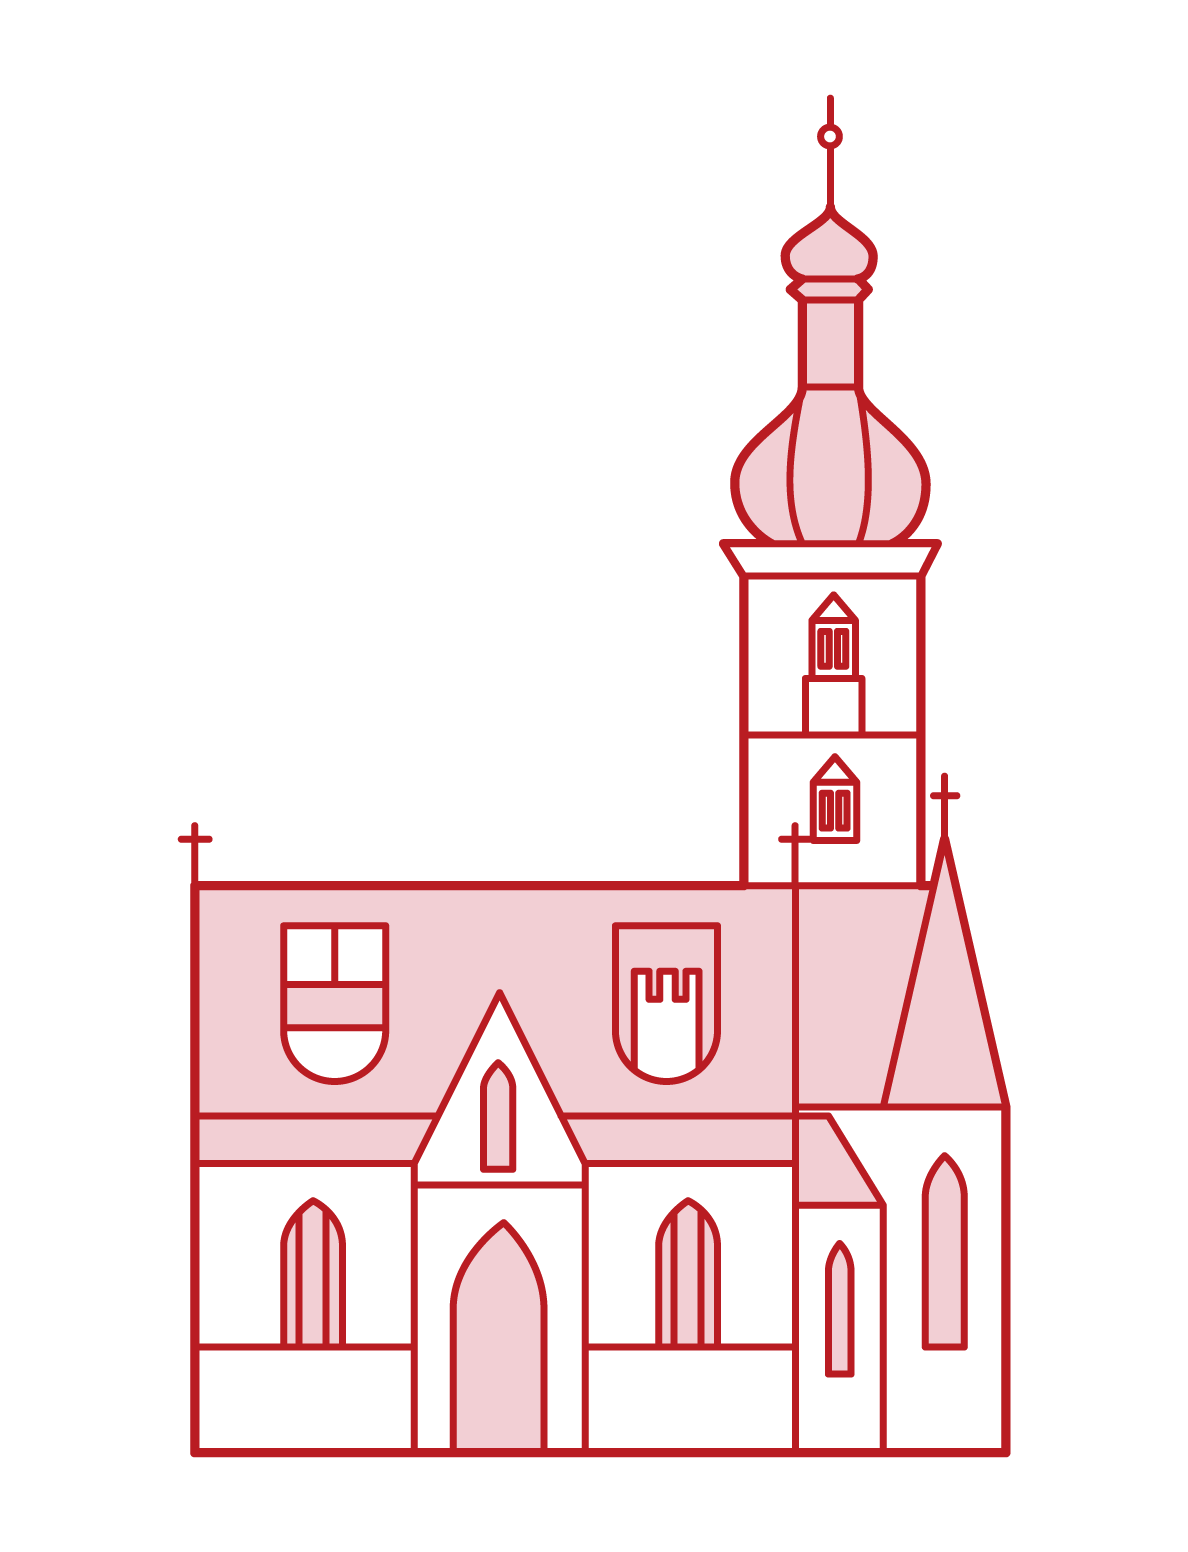 Illustrations of the St. Mark's Association